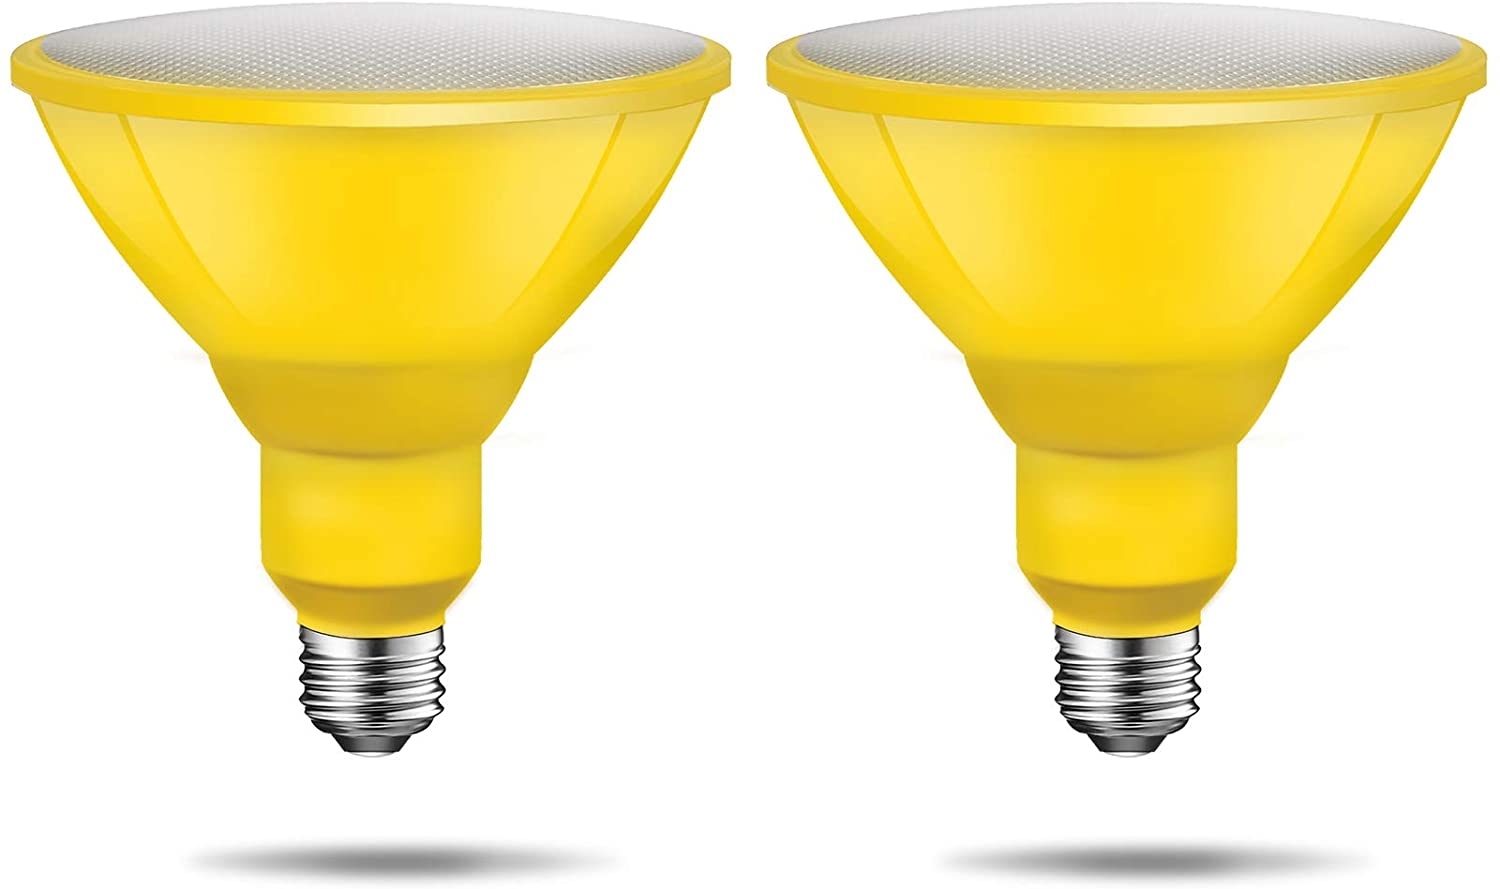 Par38 Yellow Light Bulb, 8W Equivalent 85W, E26 Base Non-dimmable